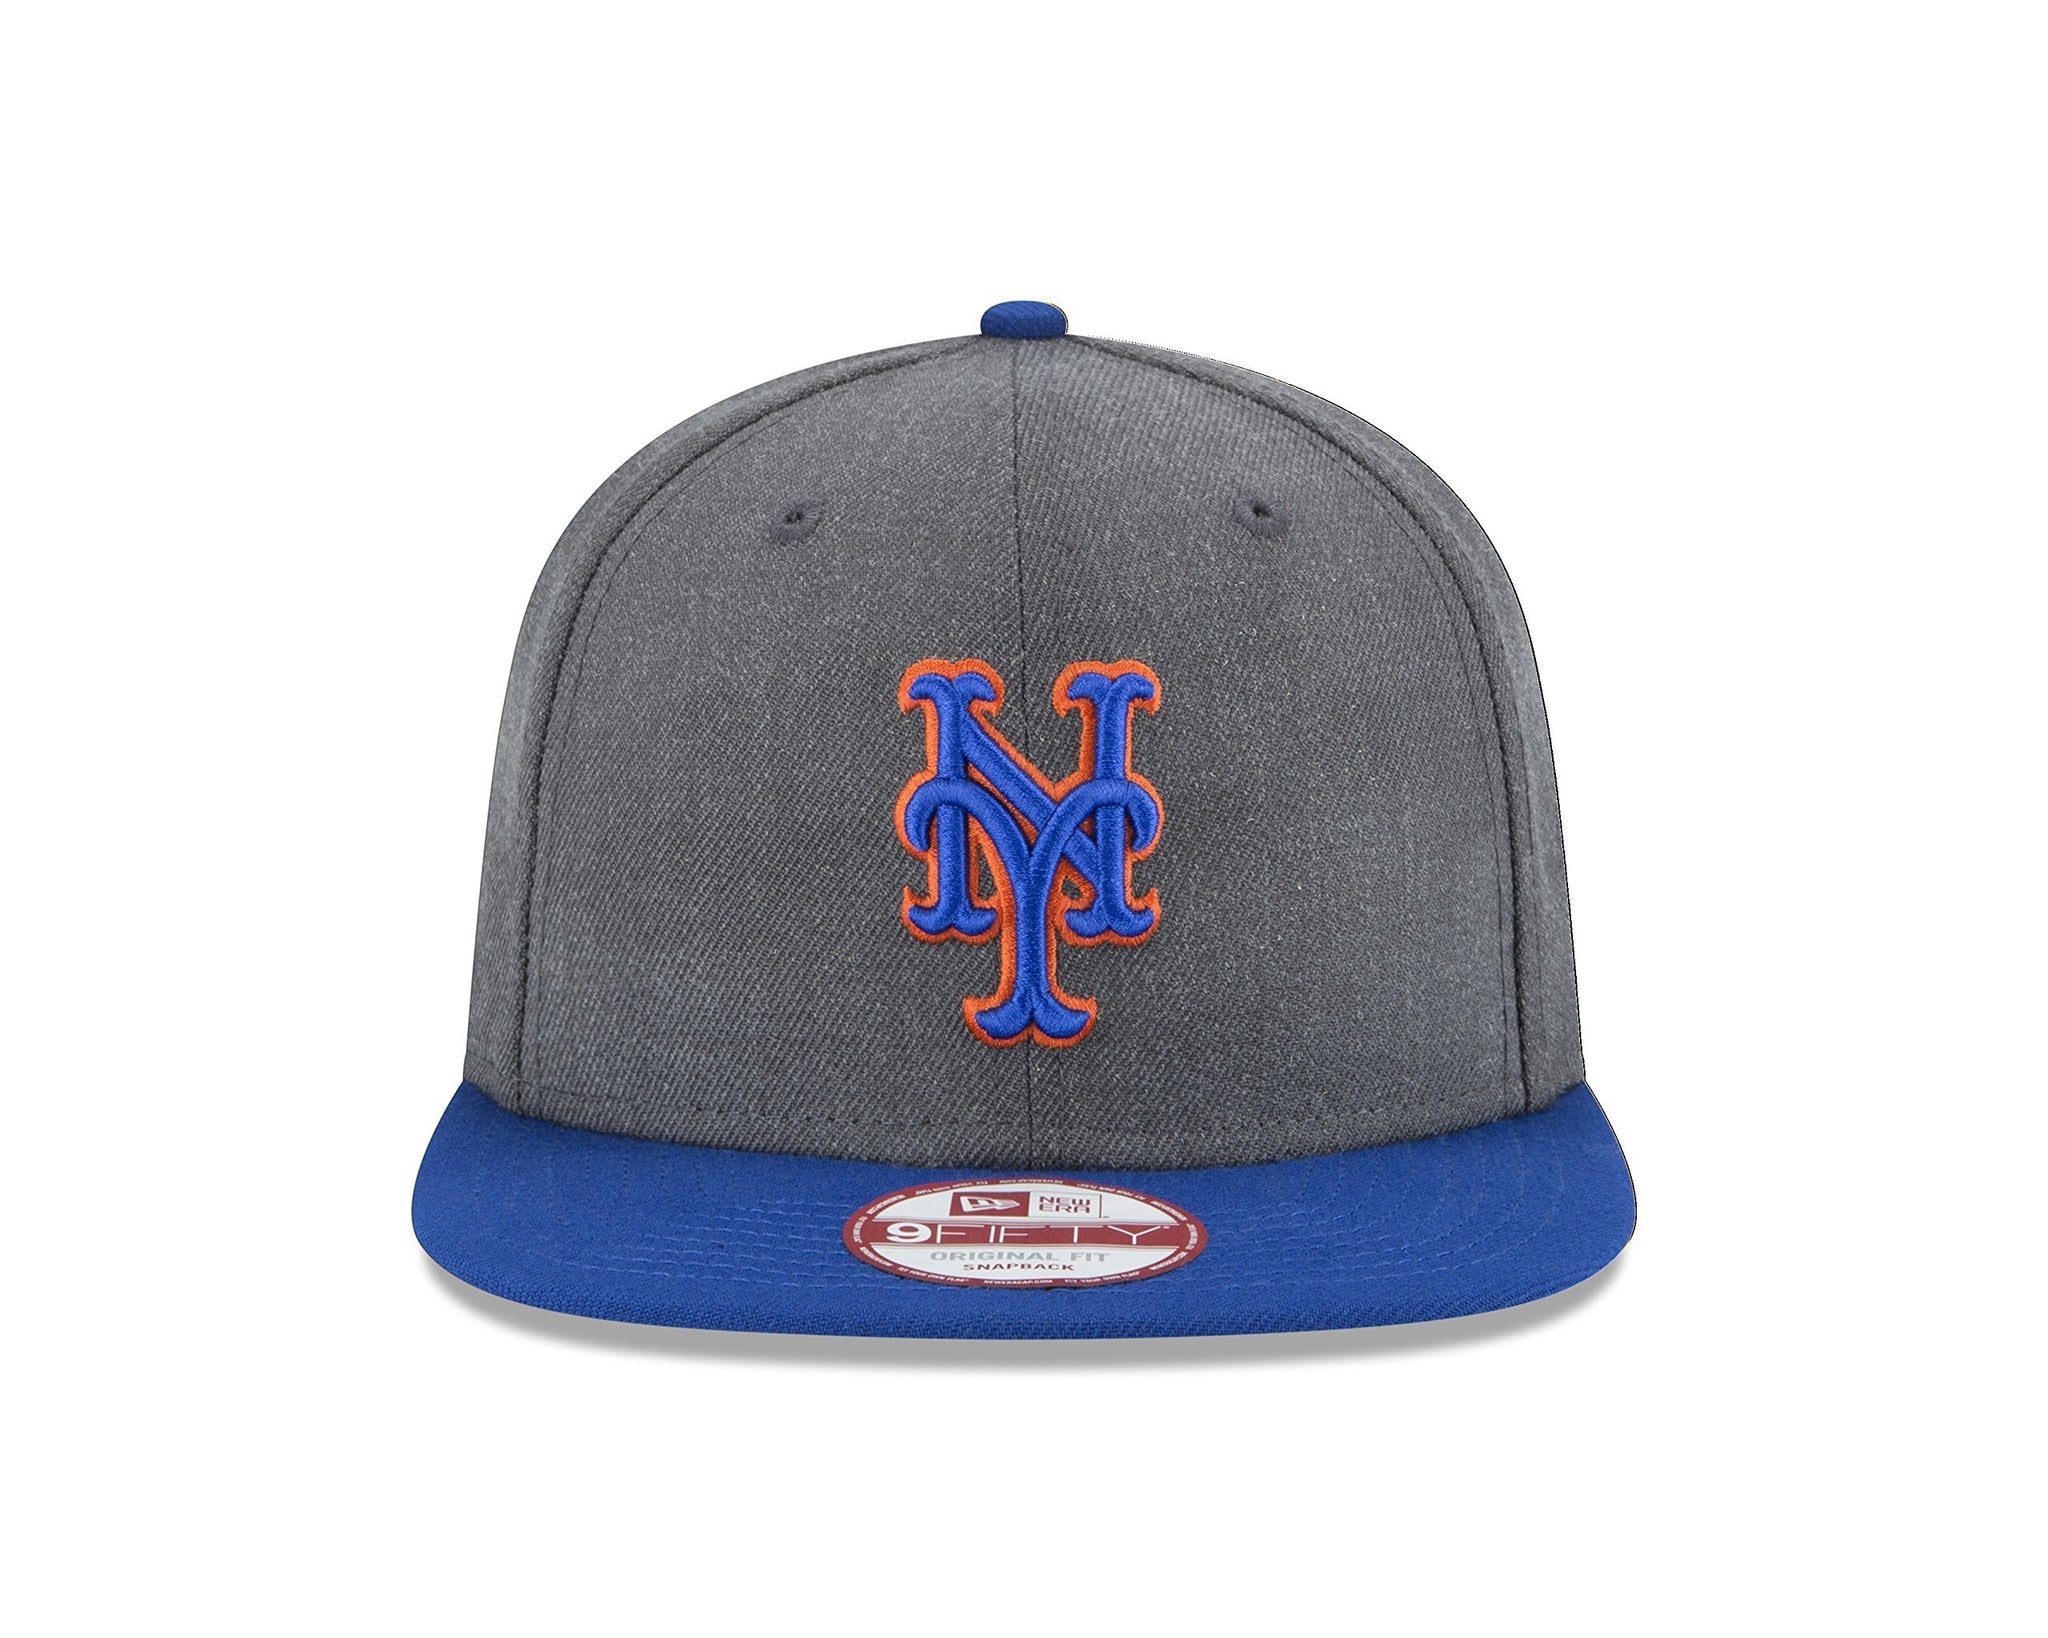 New York Mets New Era MLB 9FIFTY 950 Snapback Cap Hat Heather Dark